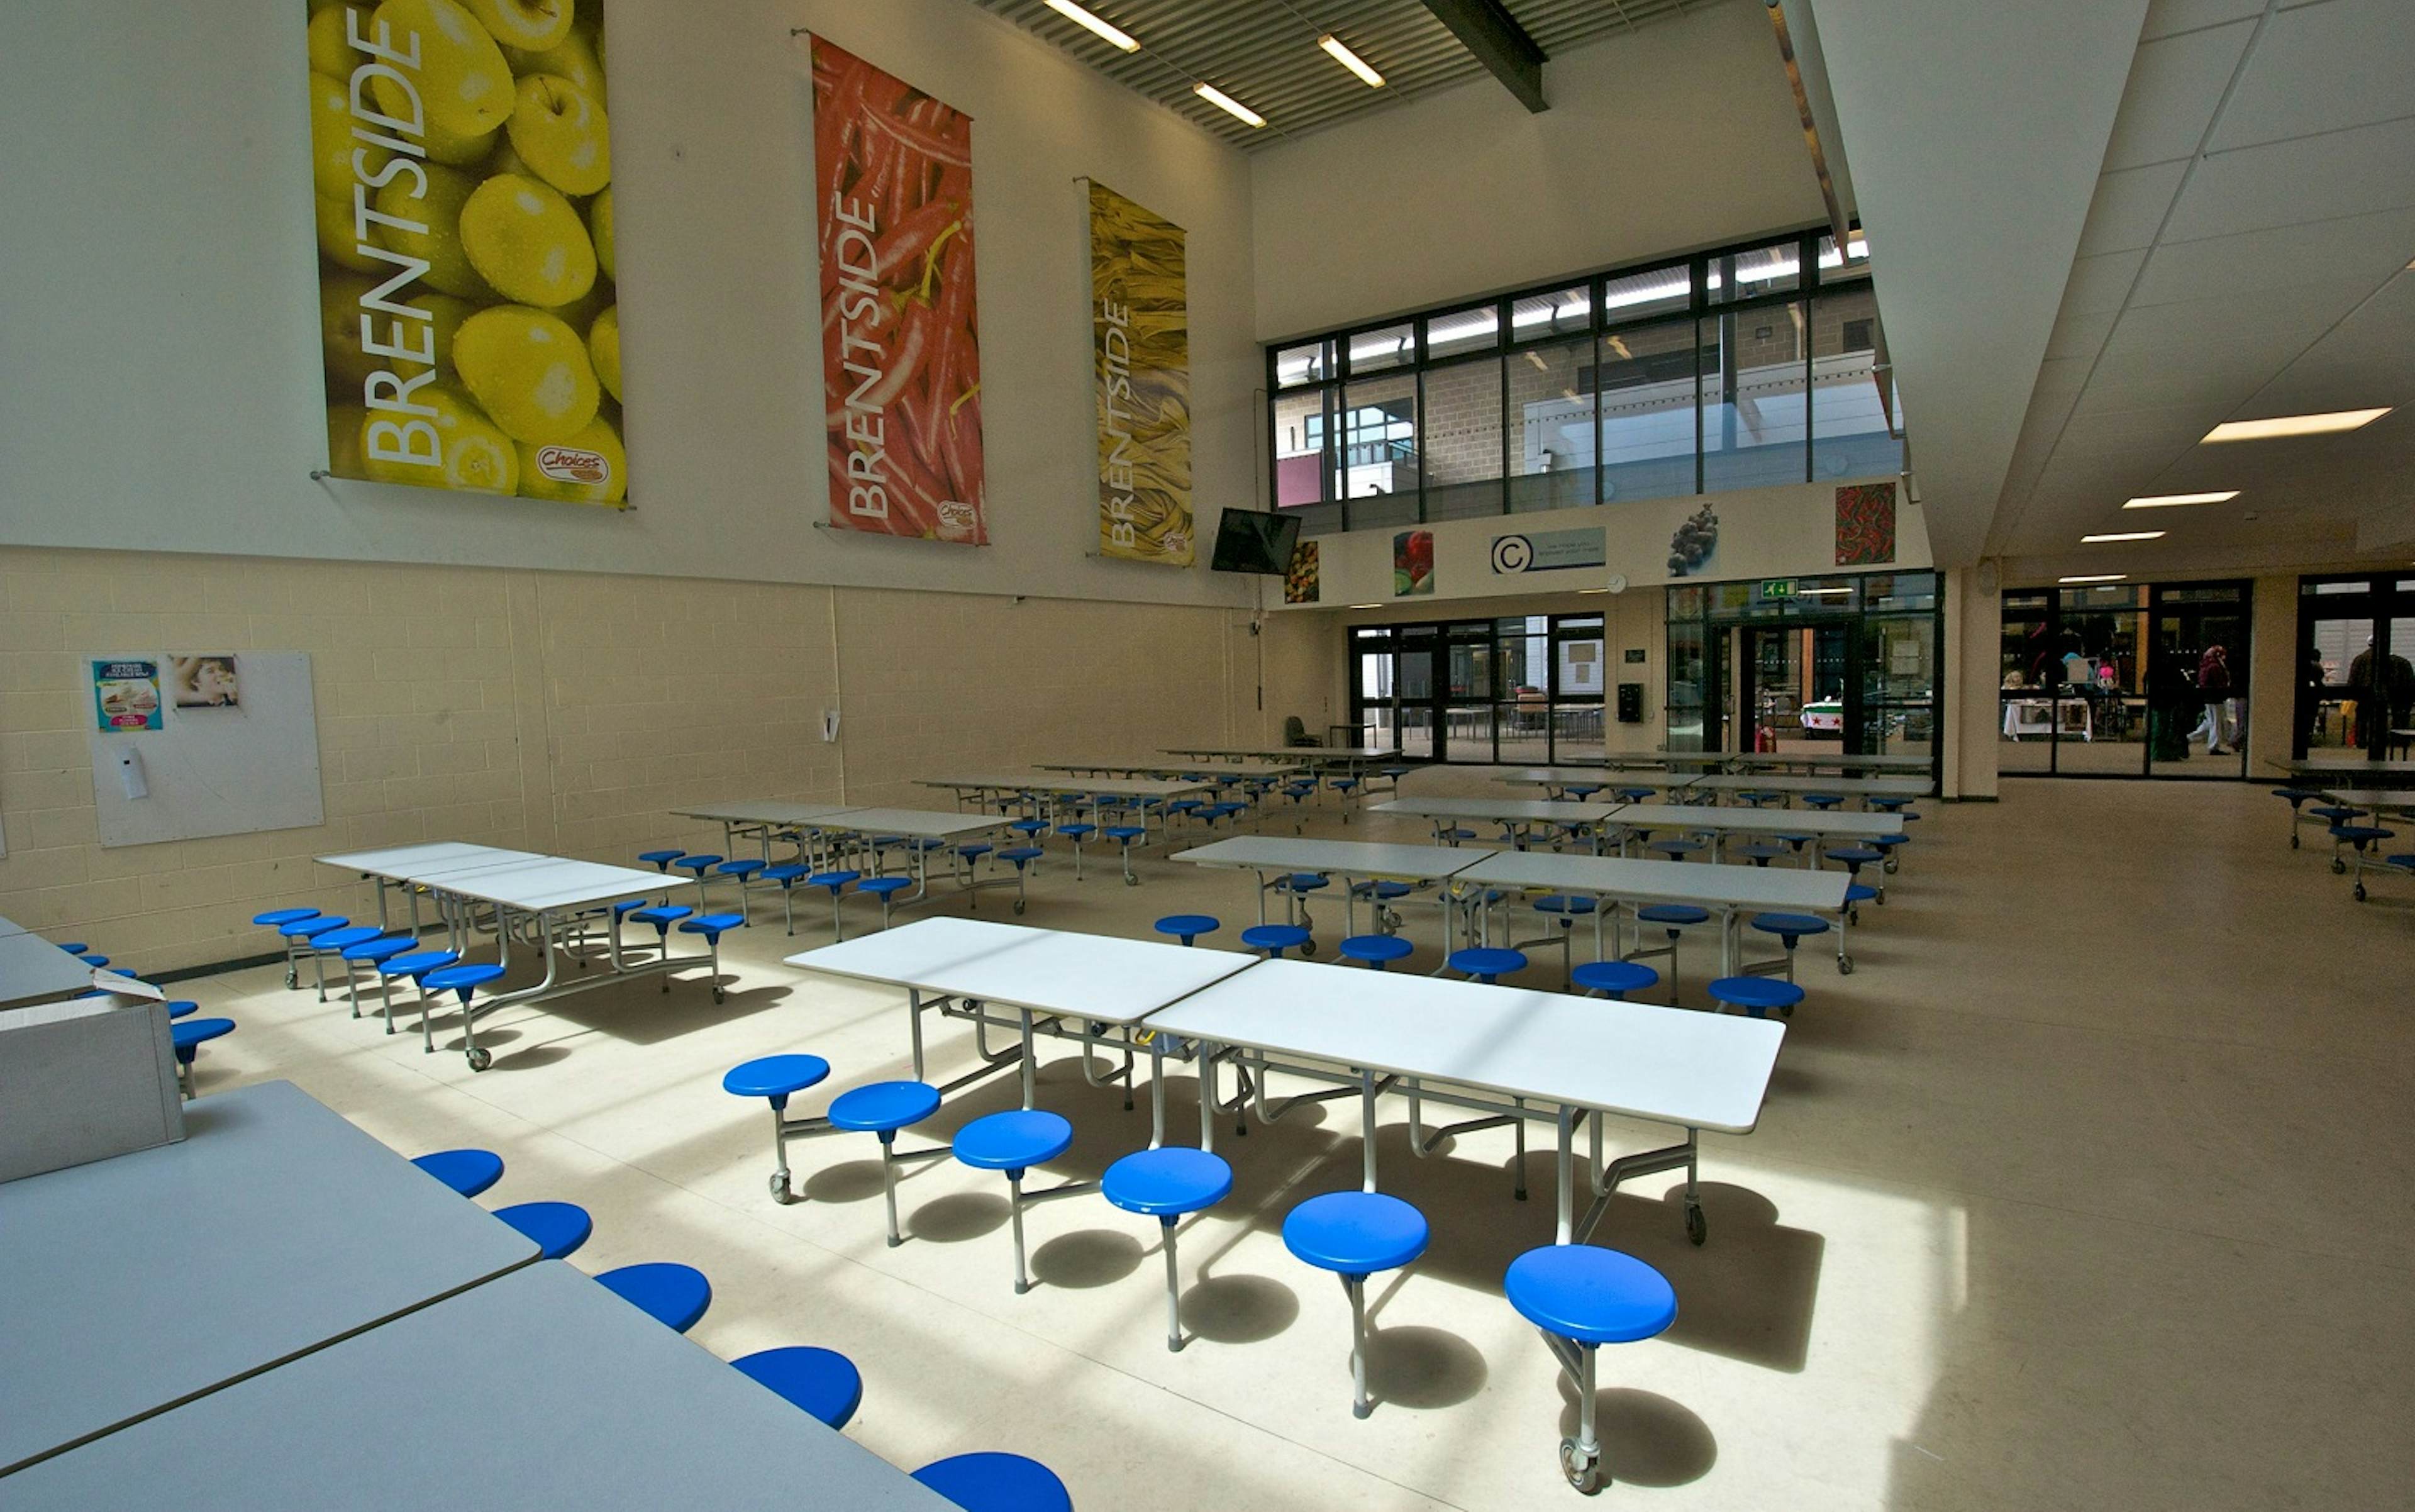 Brentside High School - Dining Hall image 1